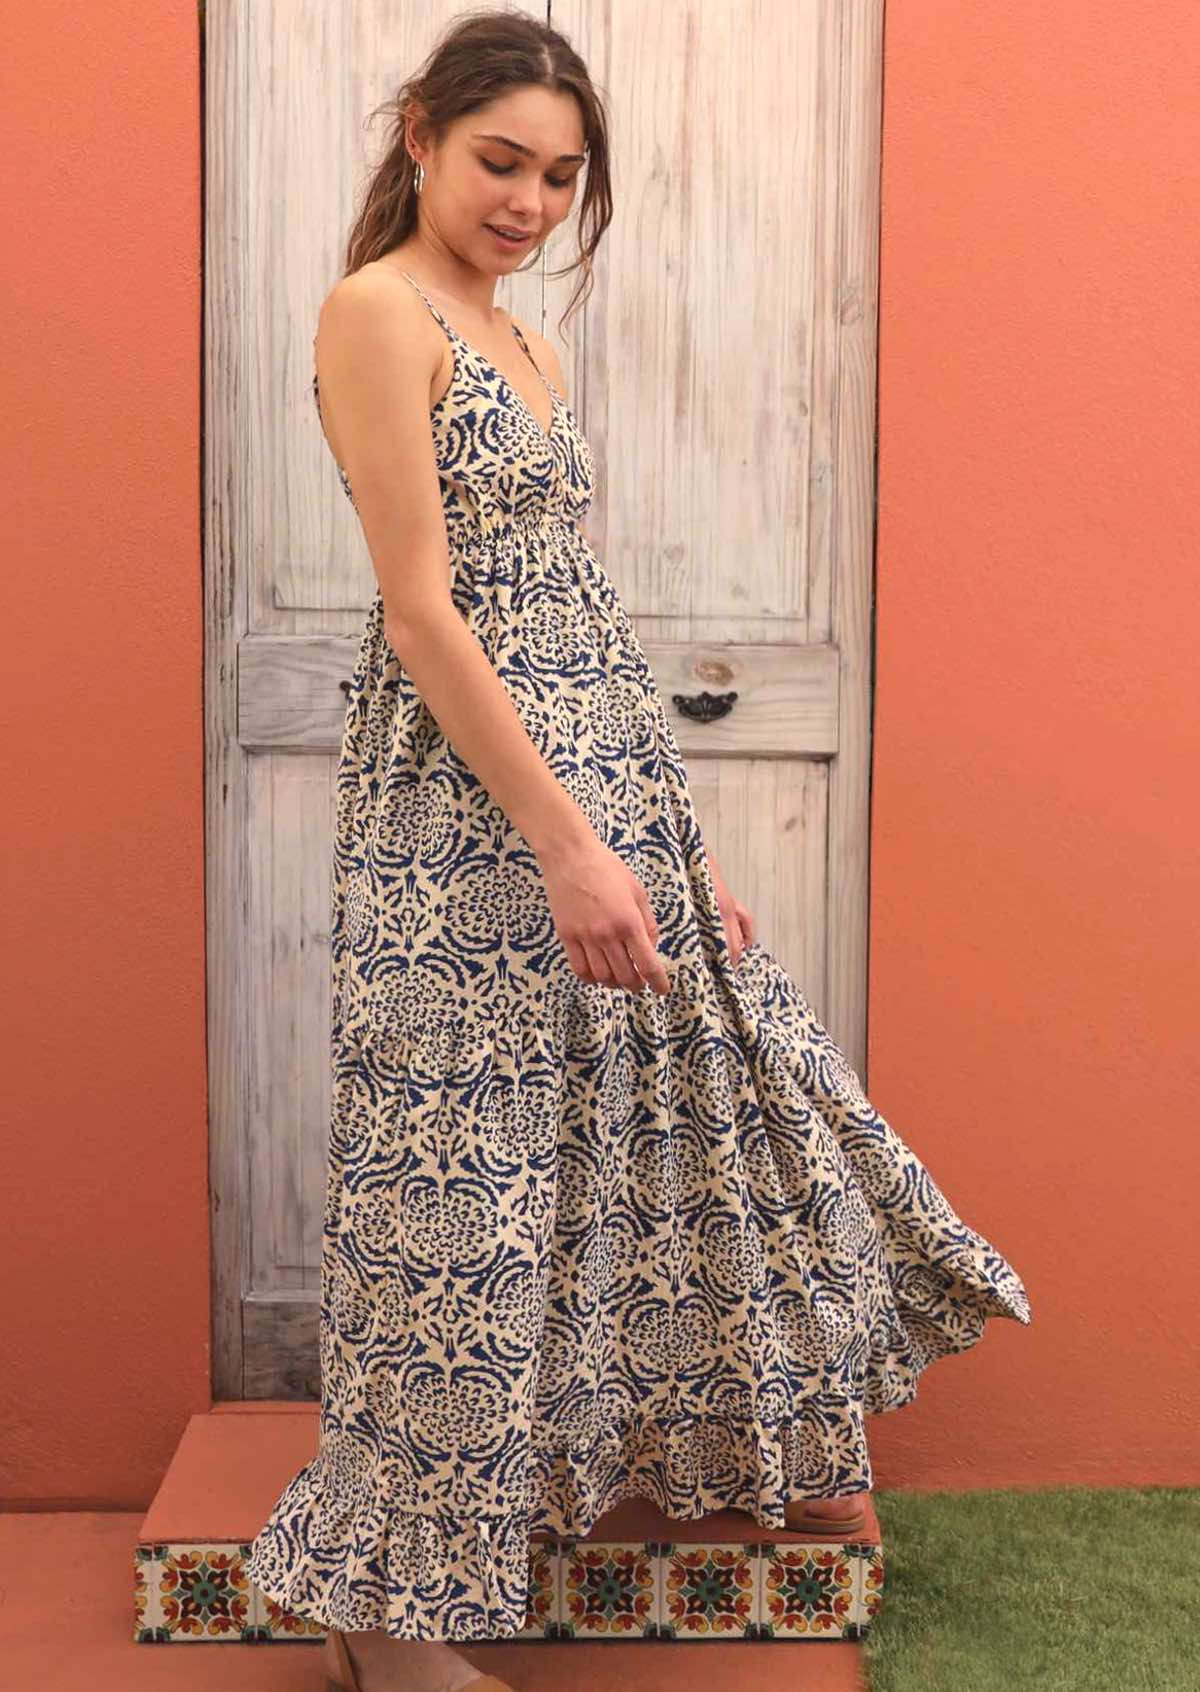 Tiered skirt on cotton bohemian maxi dress